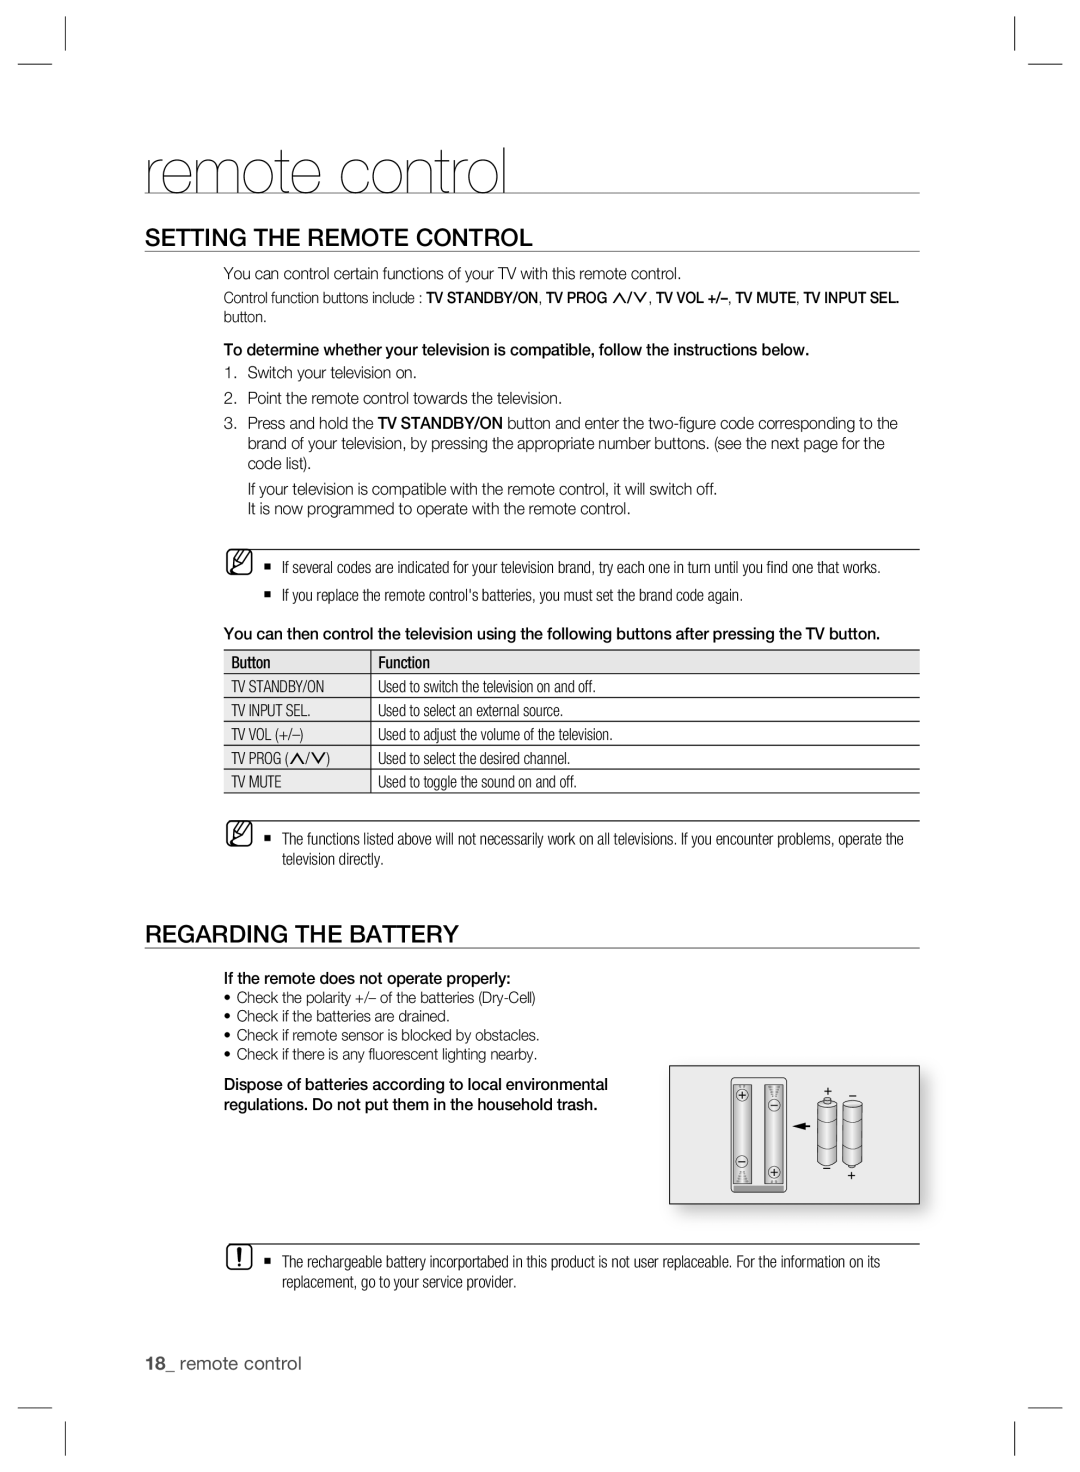 Samsung BD-P2500/EDC, BD-P2500/XEF, BD-P2500/XEE manual Setting The Remote Control, Regarding The Battery, remote control 